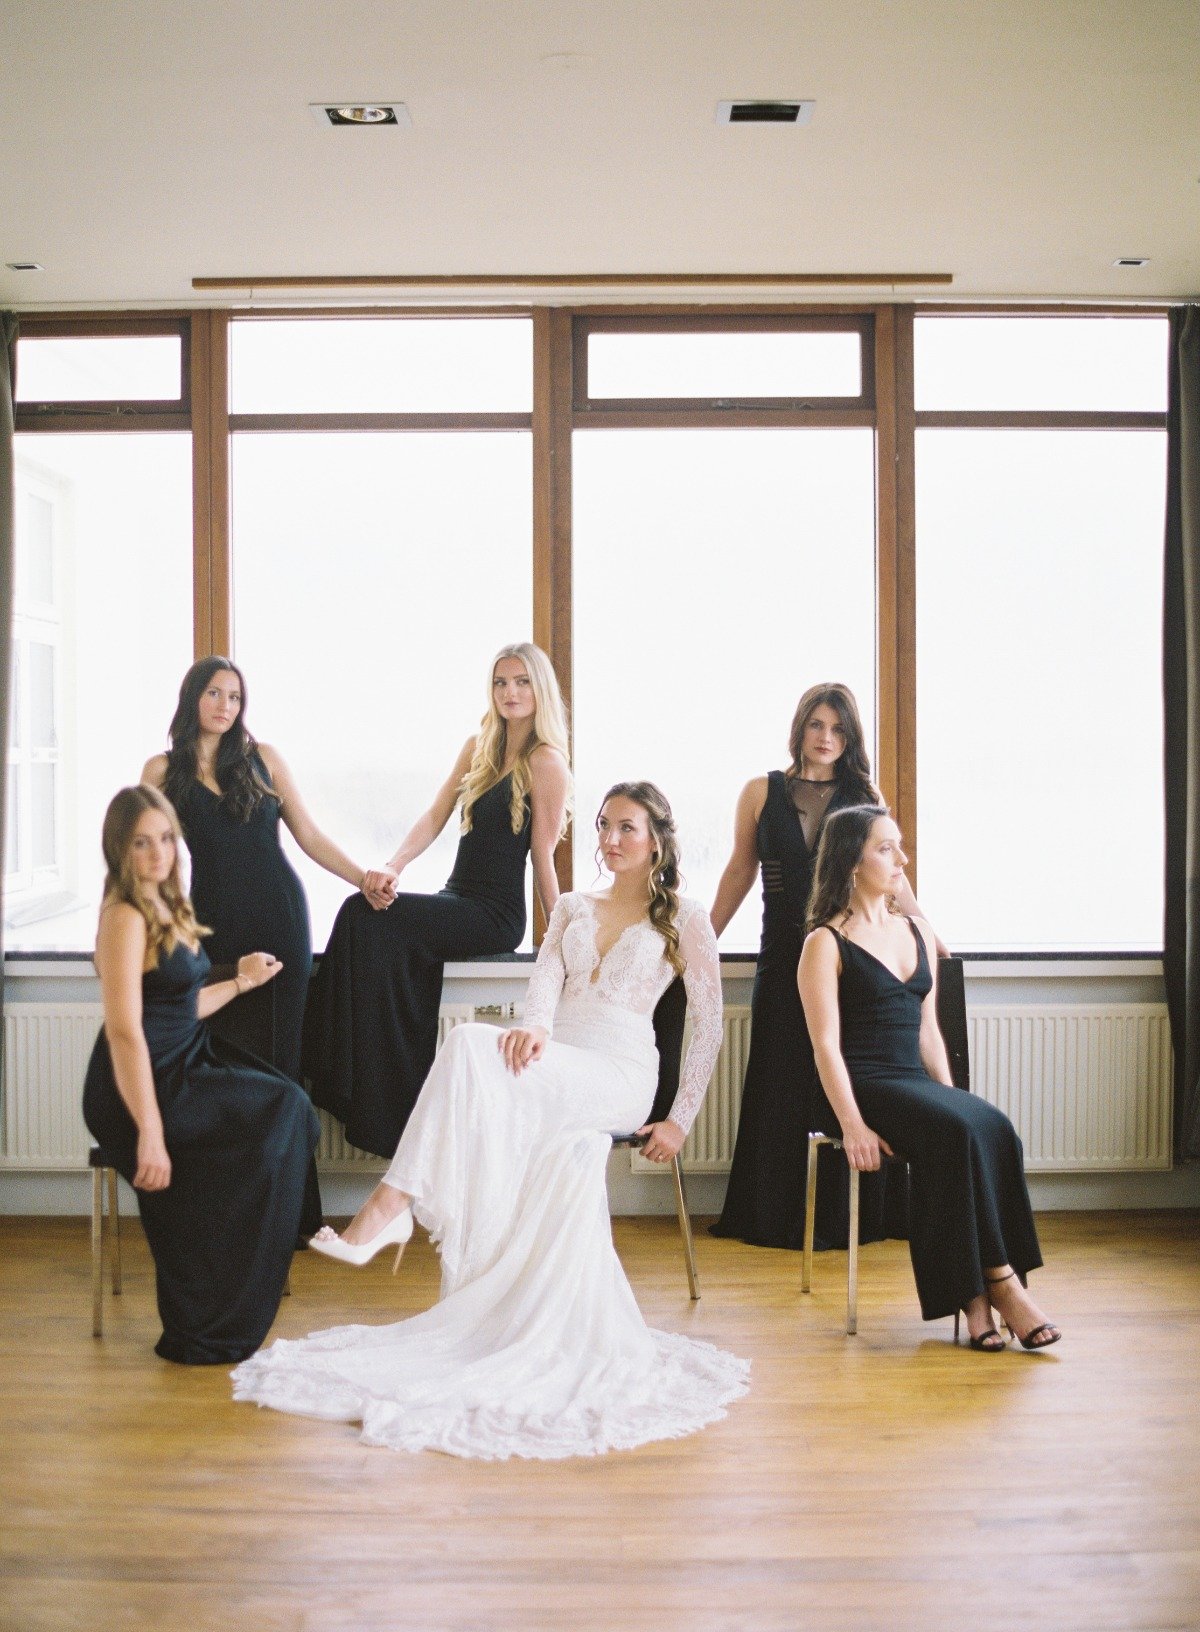 Bridesmaids in floor length black dresses